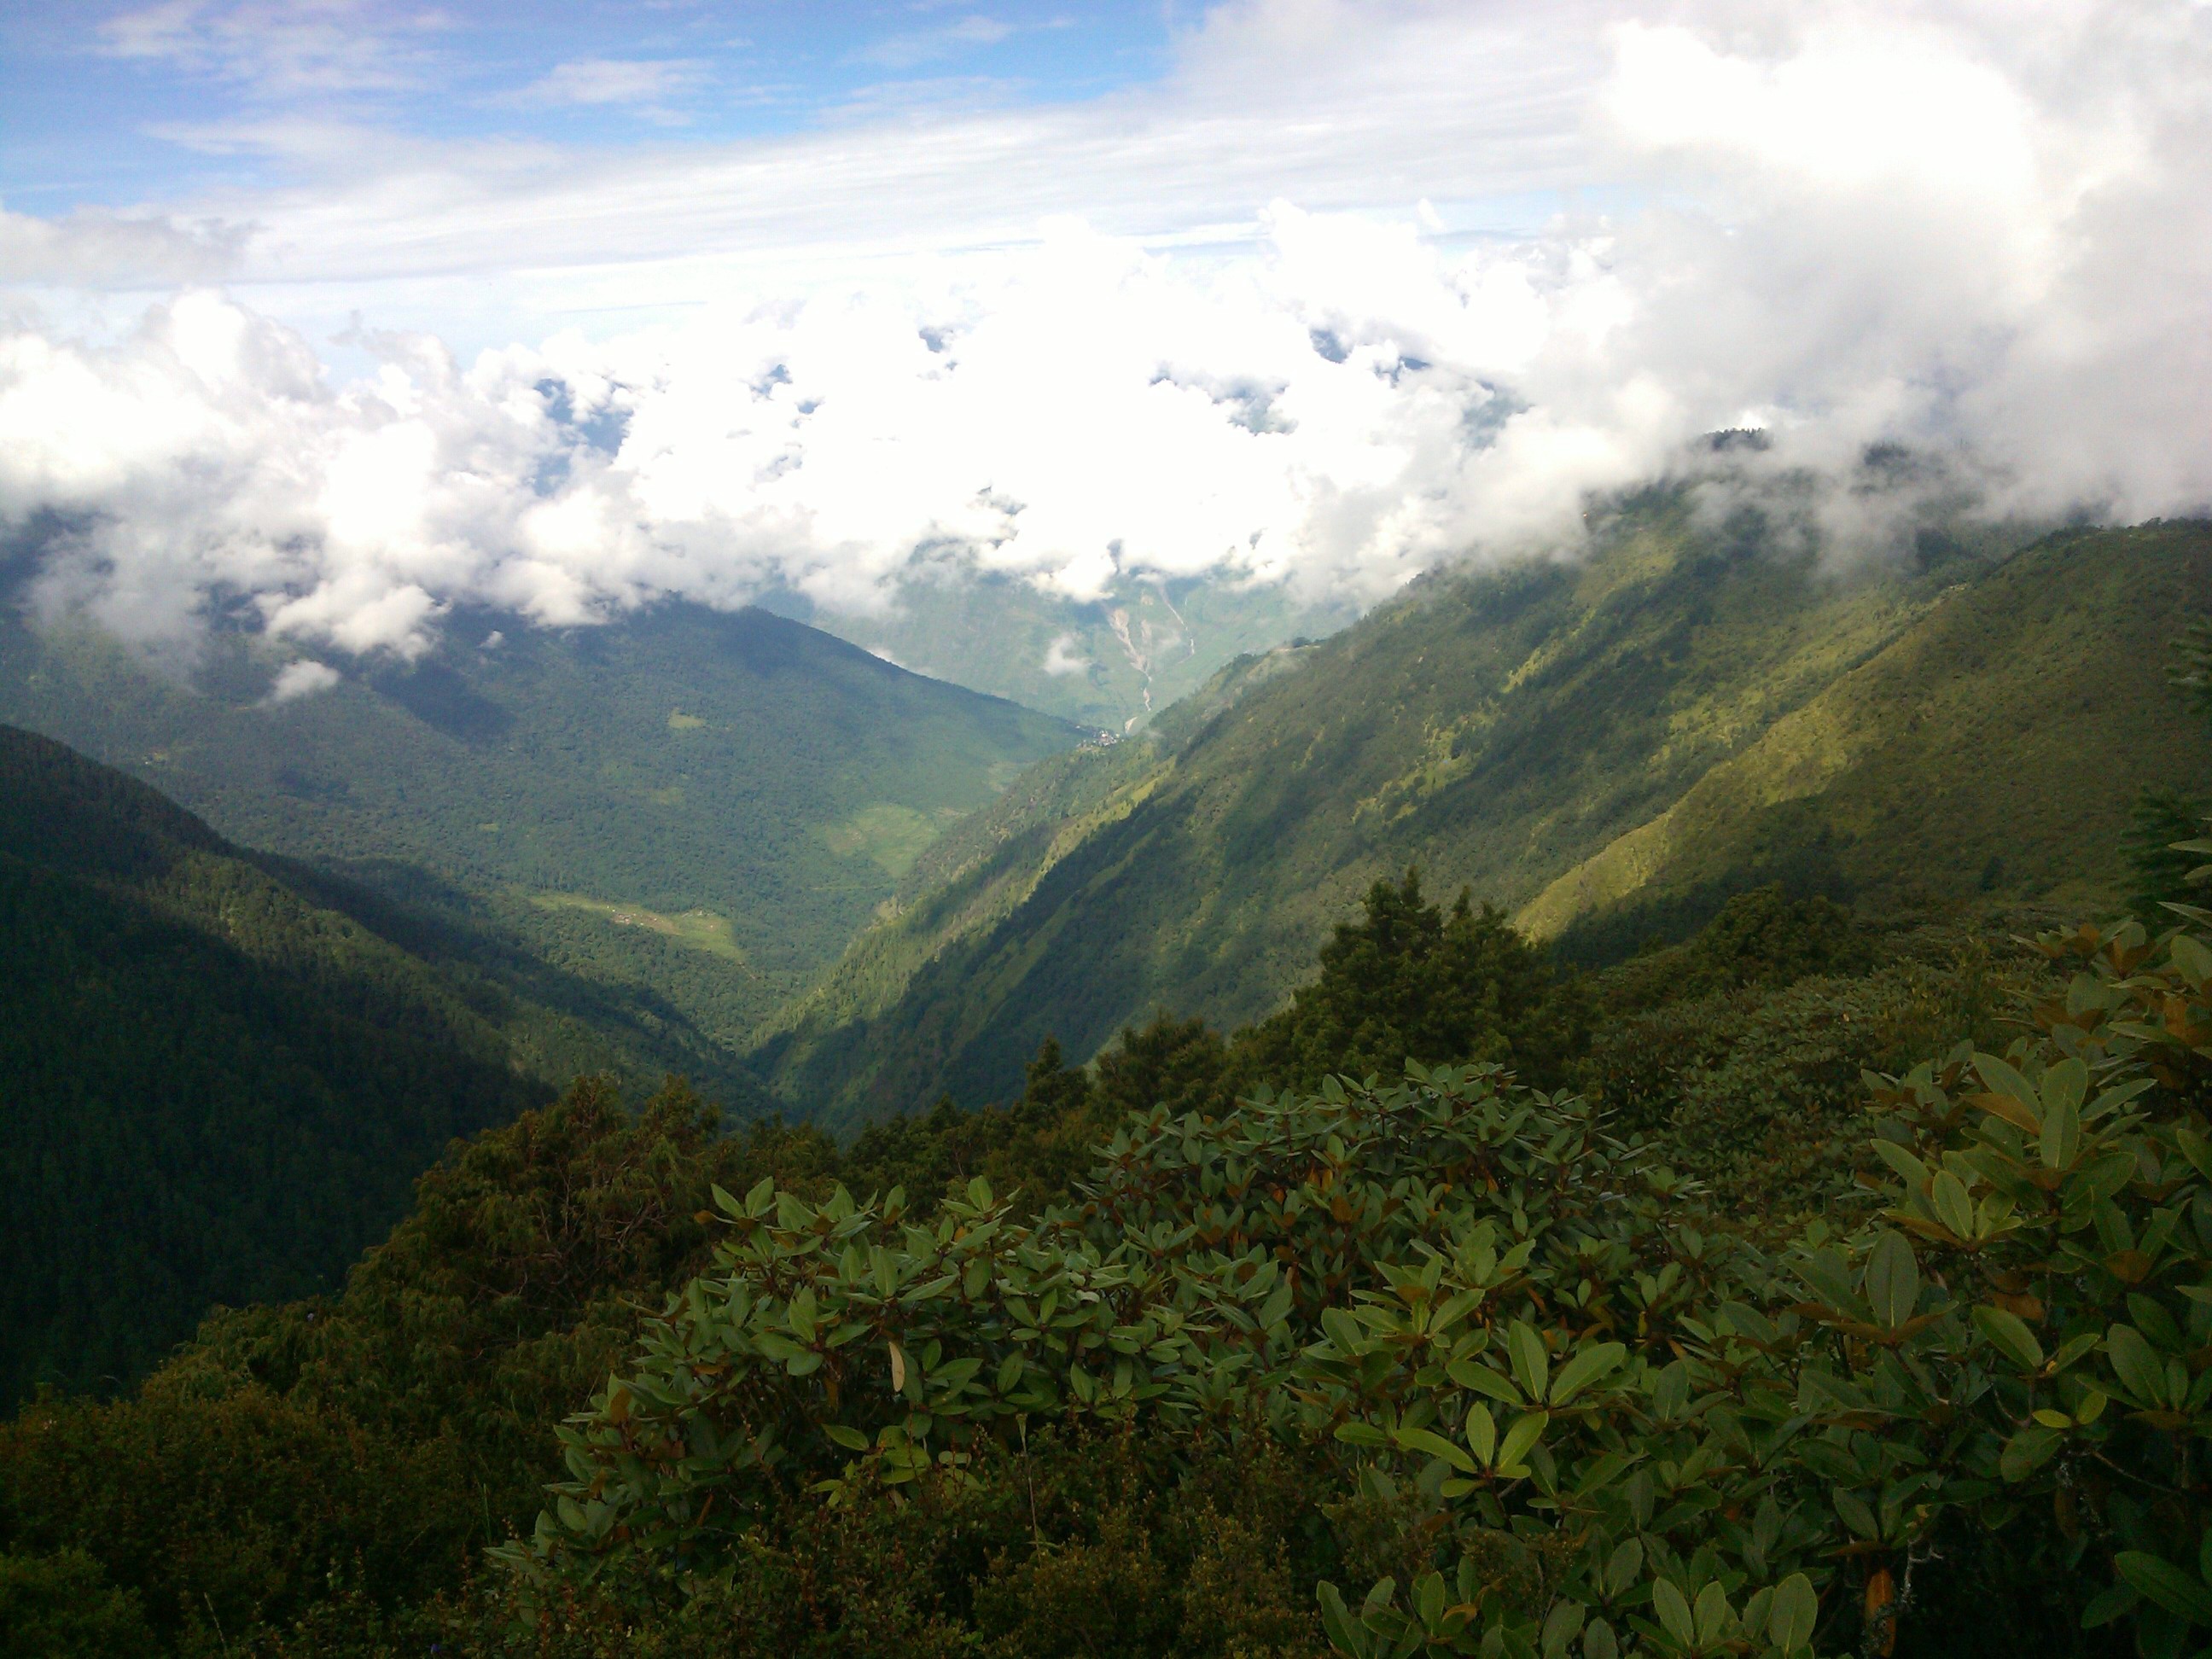 General 2592x1944 Gosaikunda Nepal landscape mountains nature clouds plants outdoors